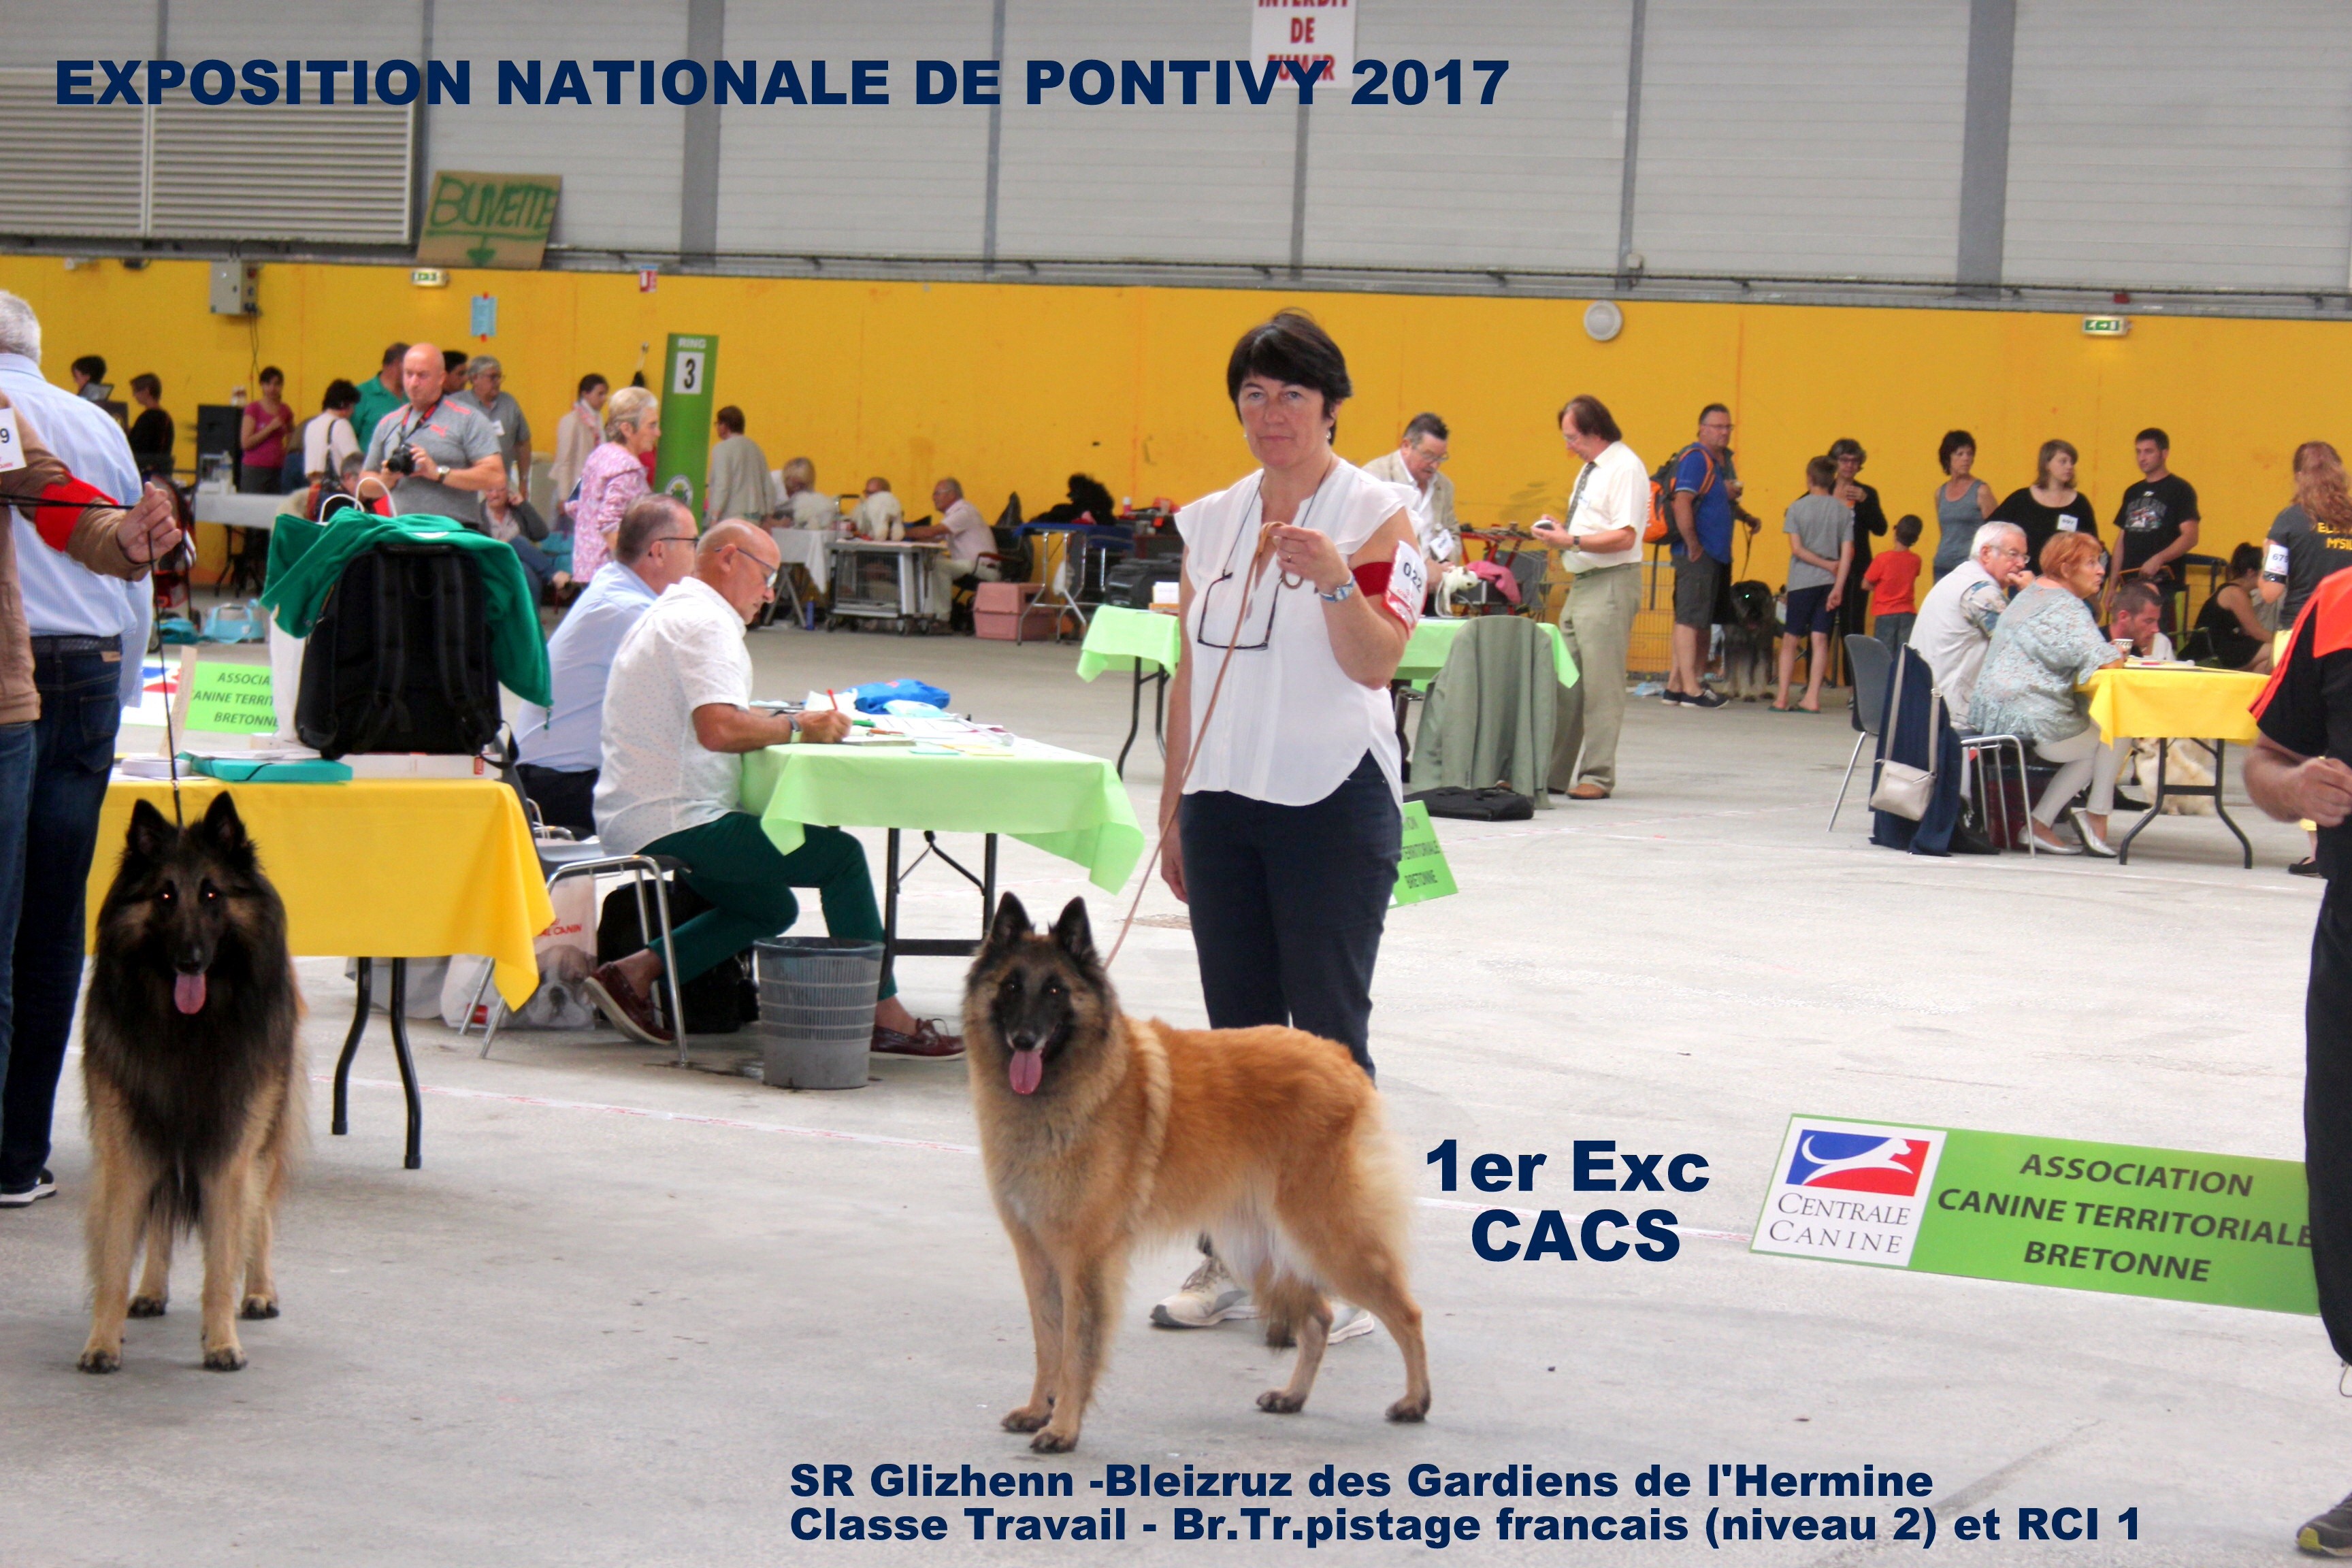 des Gardiens de l'Hermine - Exposition nationale de Pontivy 2017 